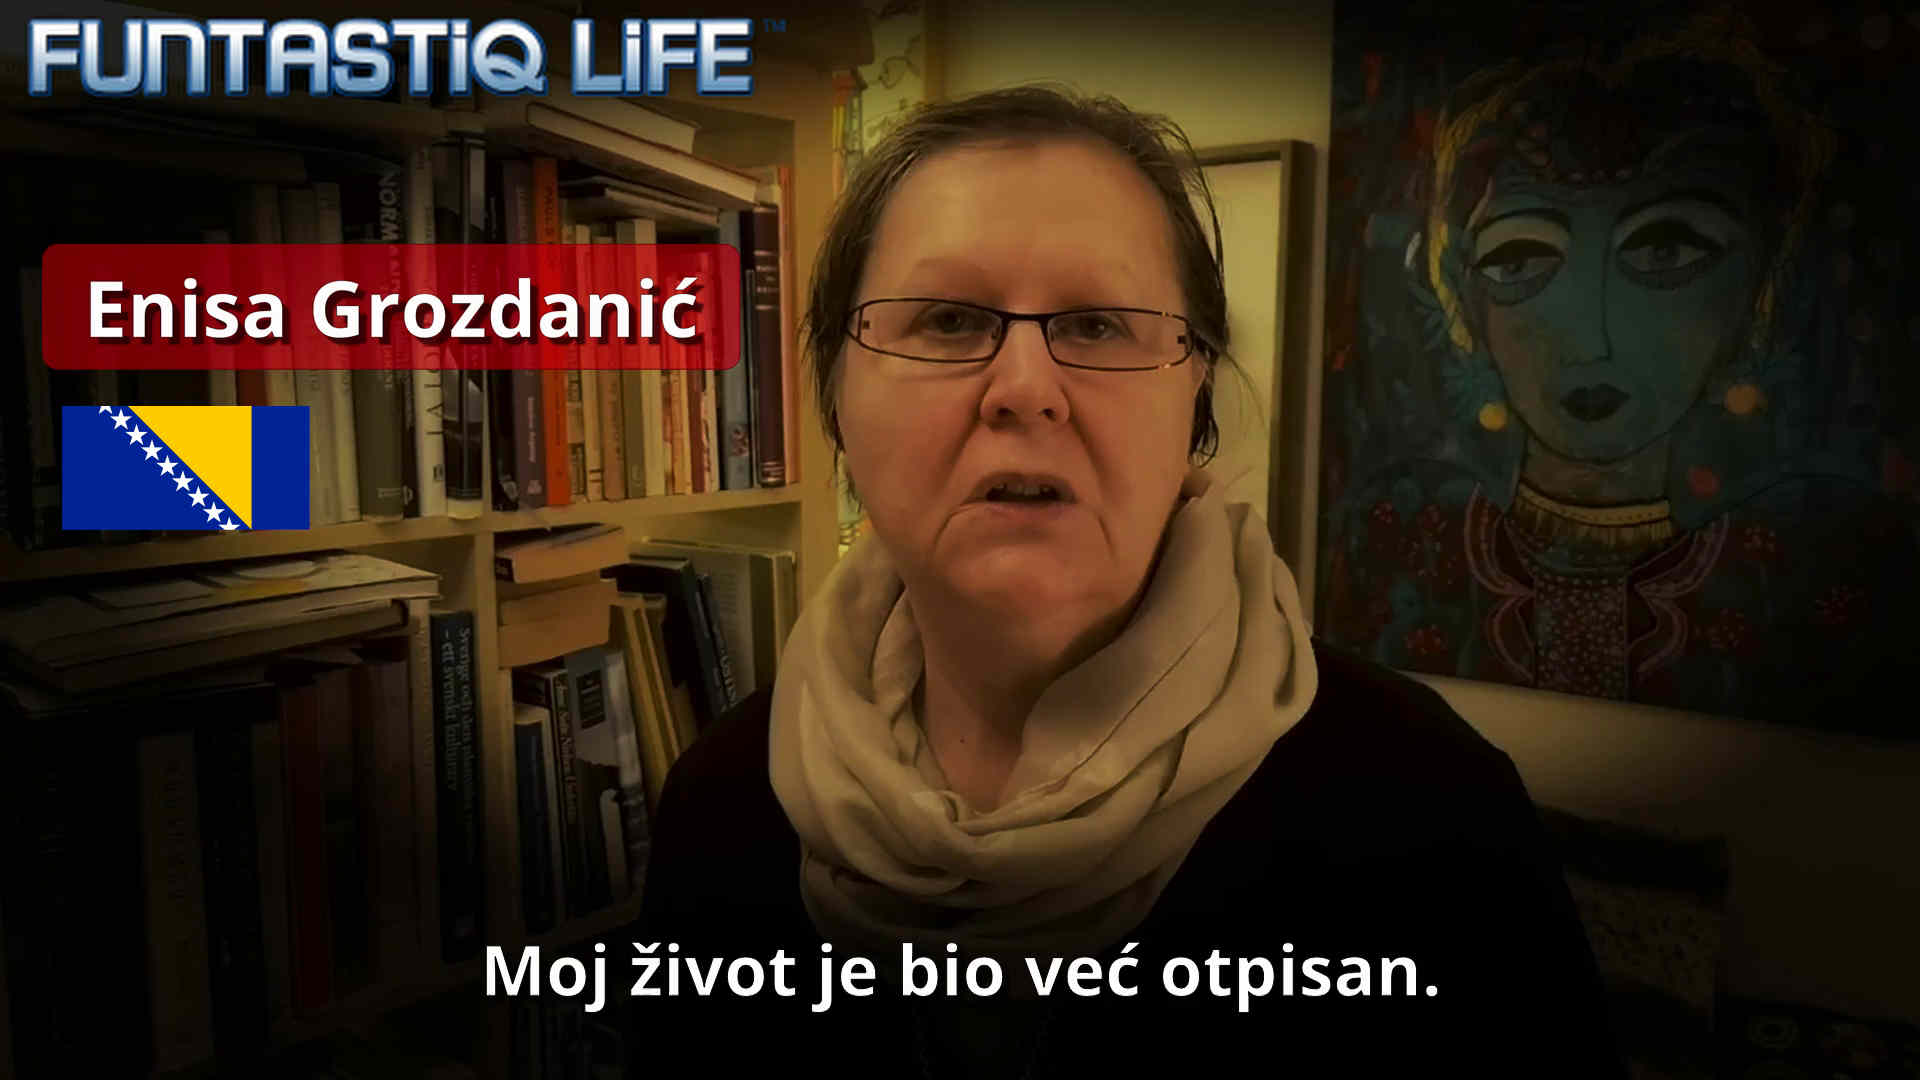 Enisa Grozdanić, spašena od smrti diabetesa u zadnjih trenutak